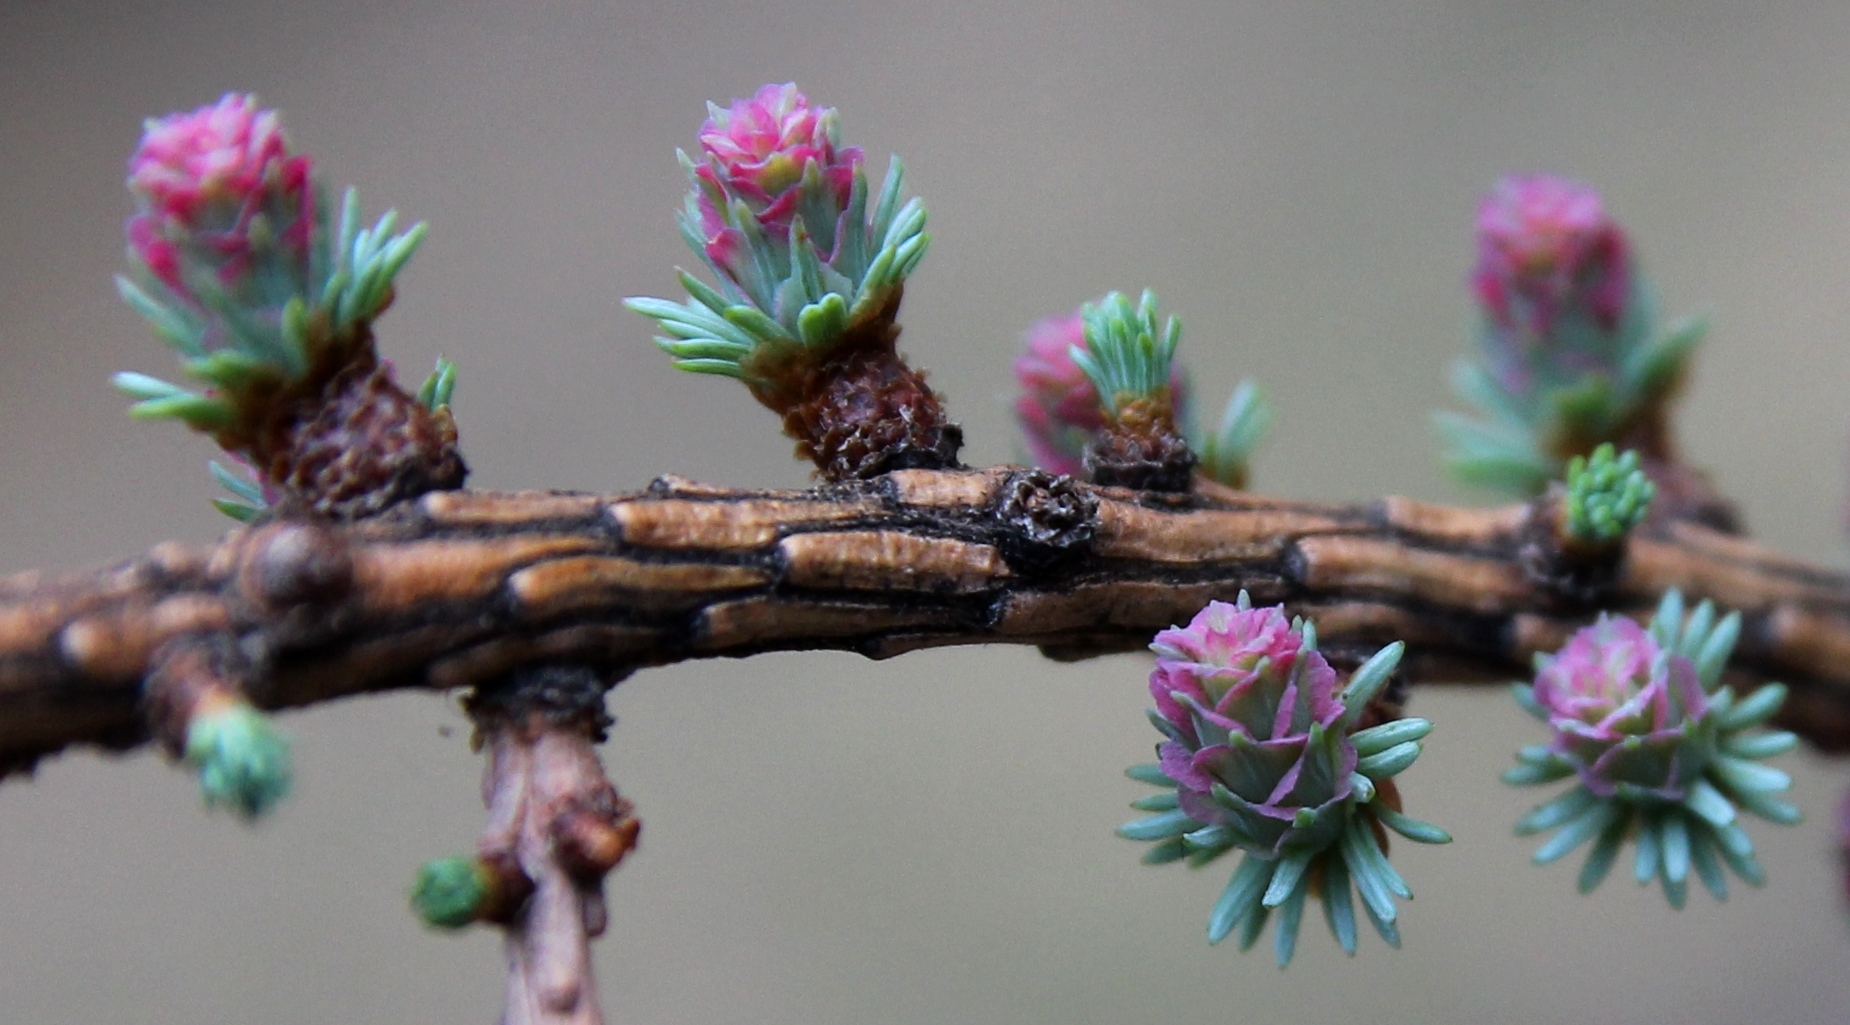  Larix laricina `Tharandt`. Лиственница американская. Веточка в период цветения. Фото Горошкевича С.Н.